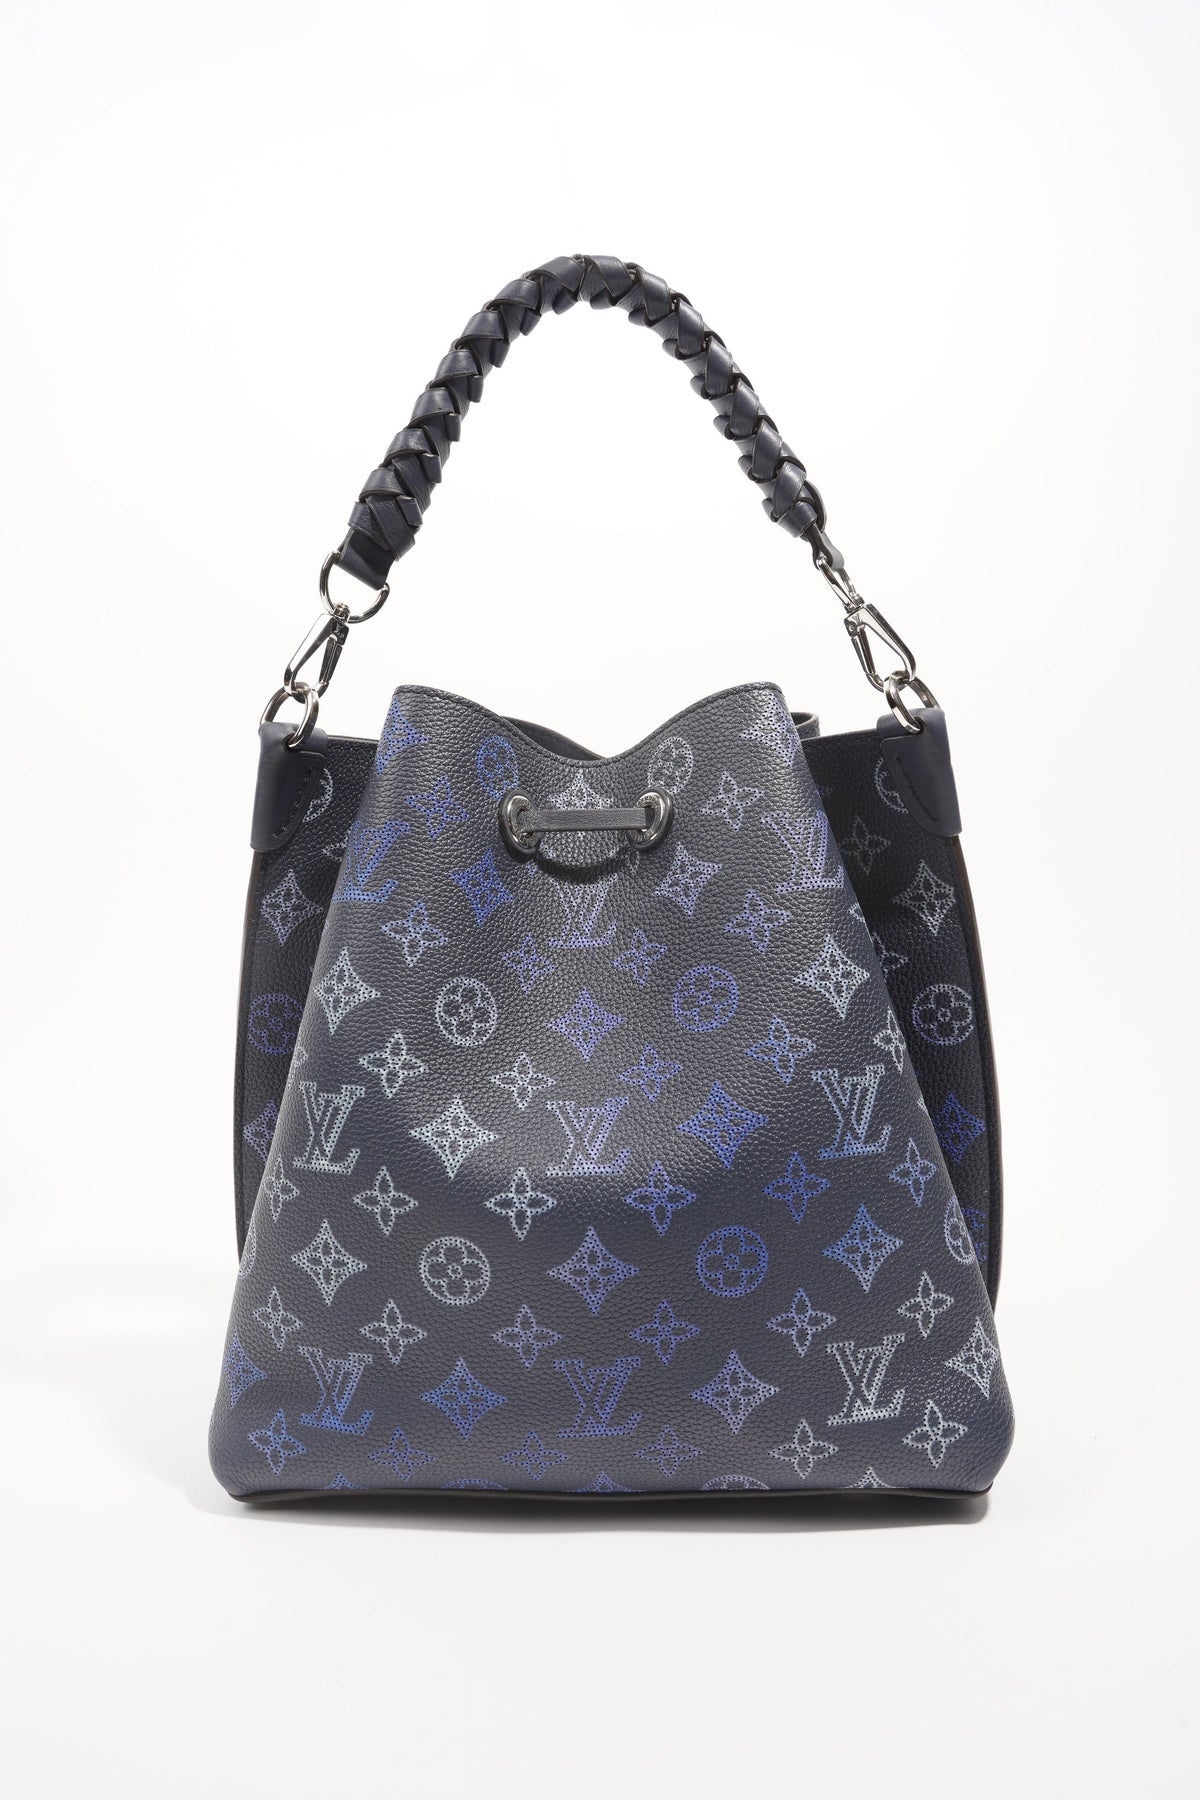 Louis Vuitton Handbag Muria Mahina Perforated Calfskin Leather